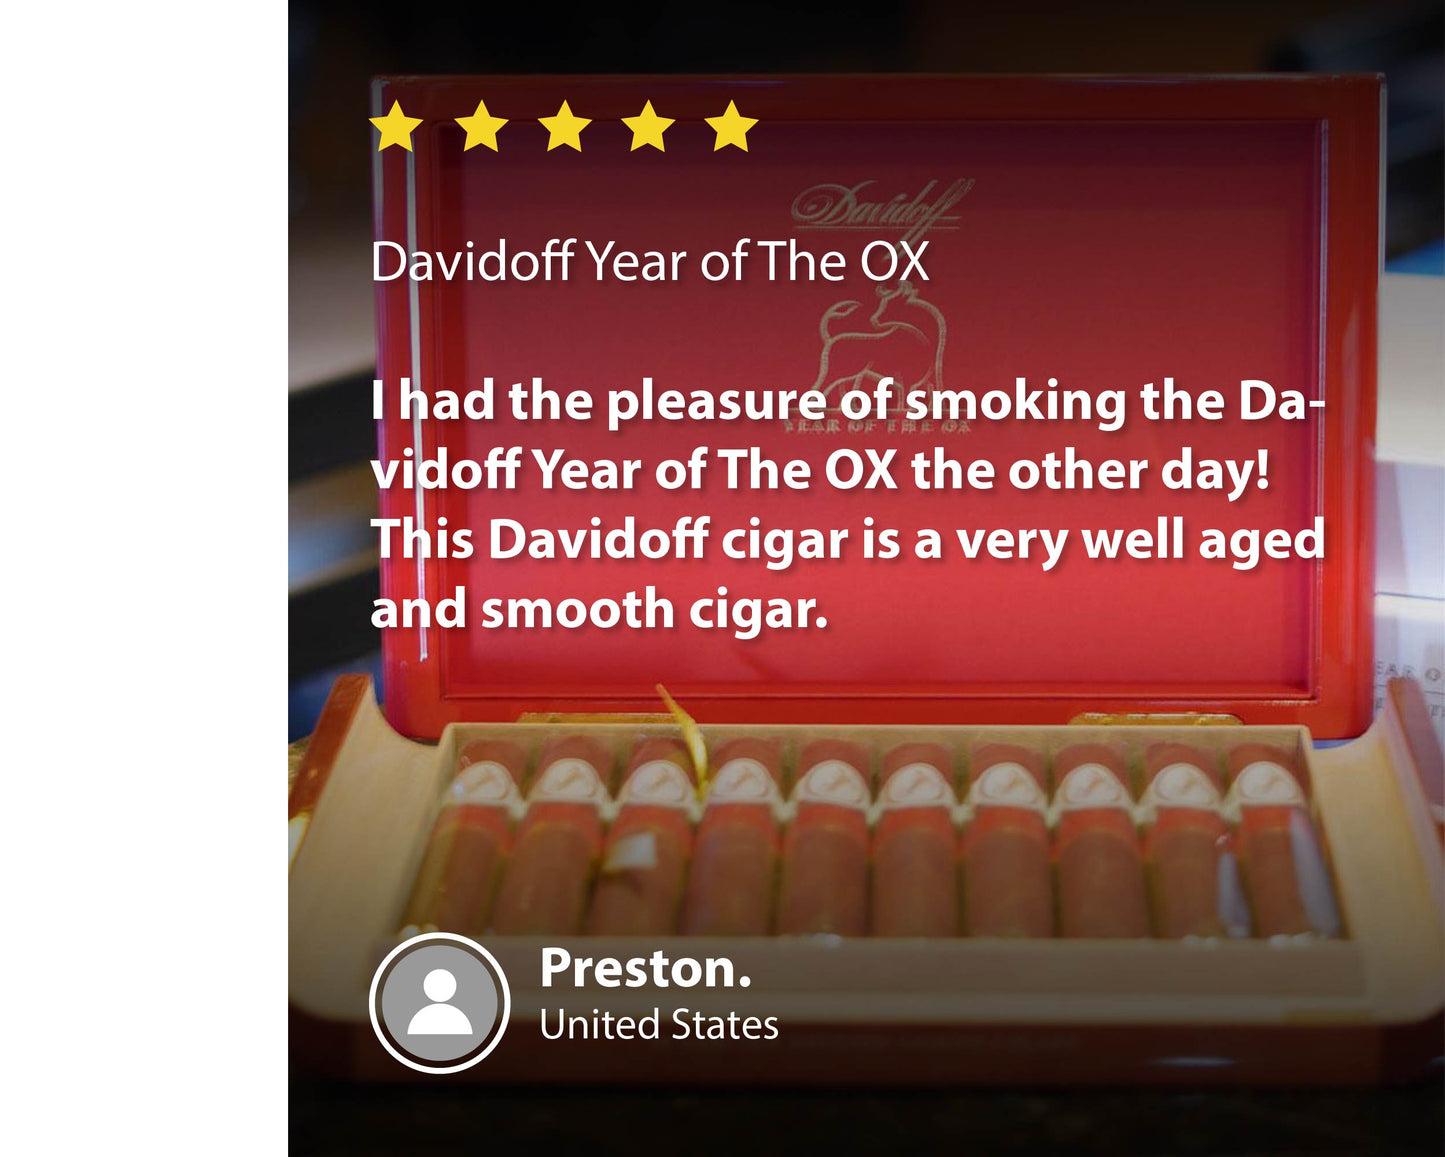 Davidoff Year of The OX